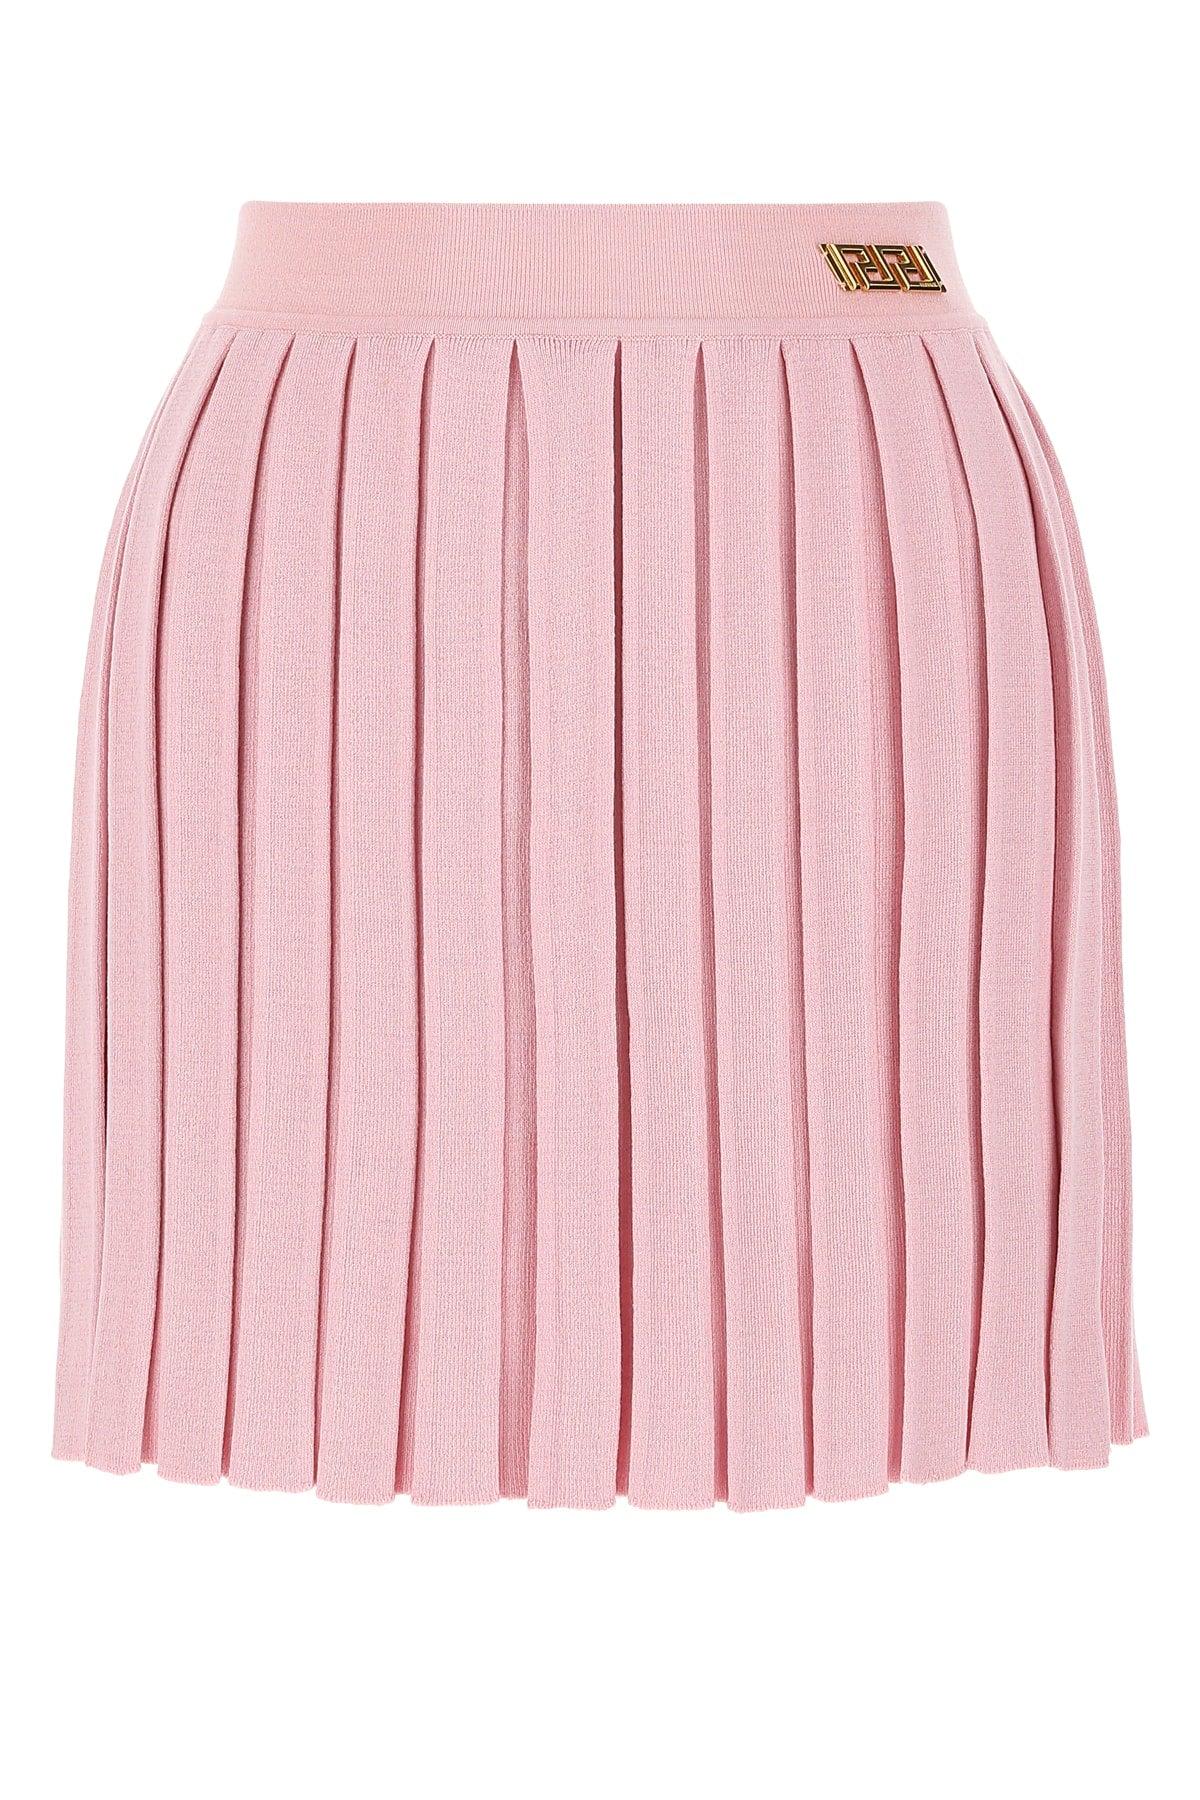 Versace Ribbed Knit Box Pleated Mini Skirt